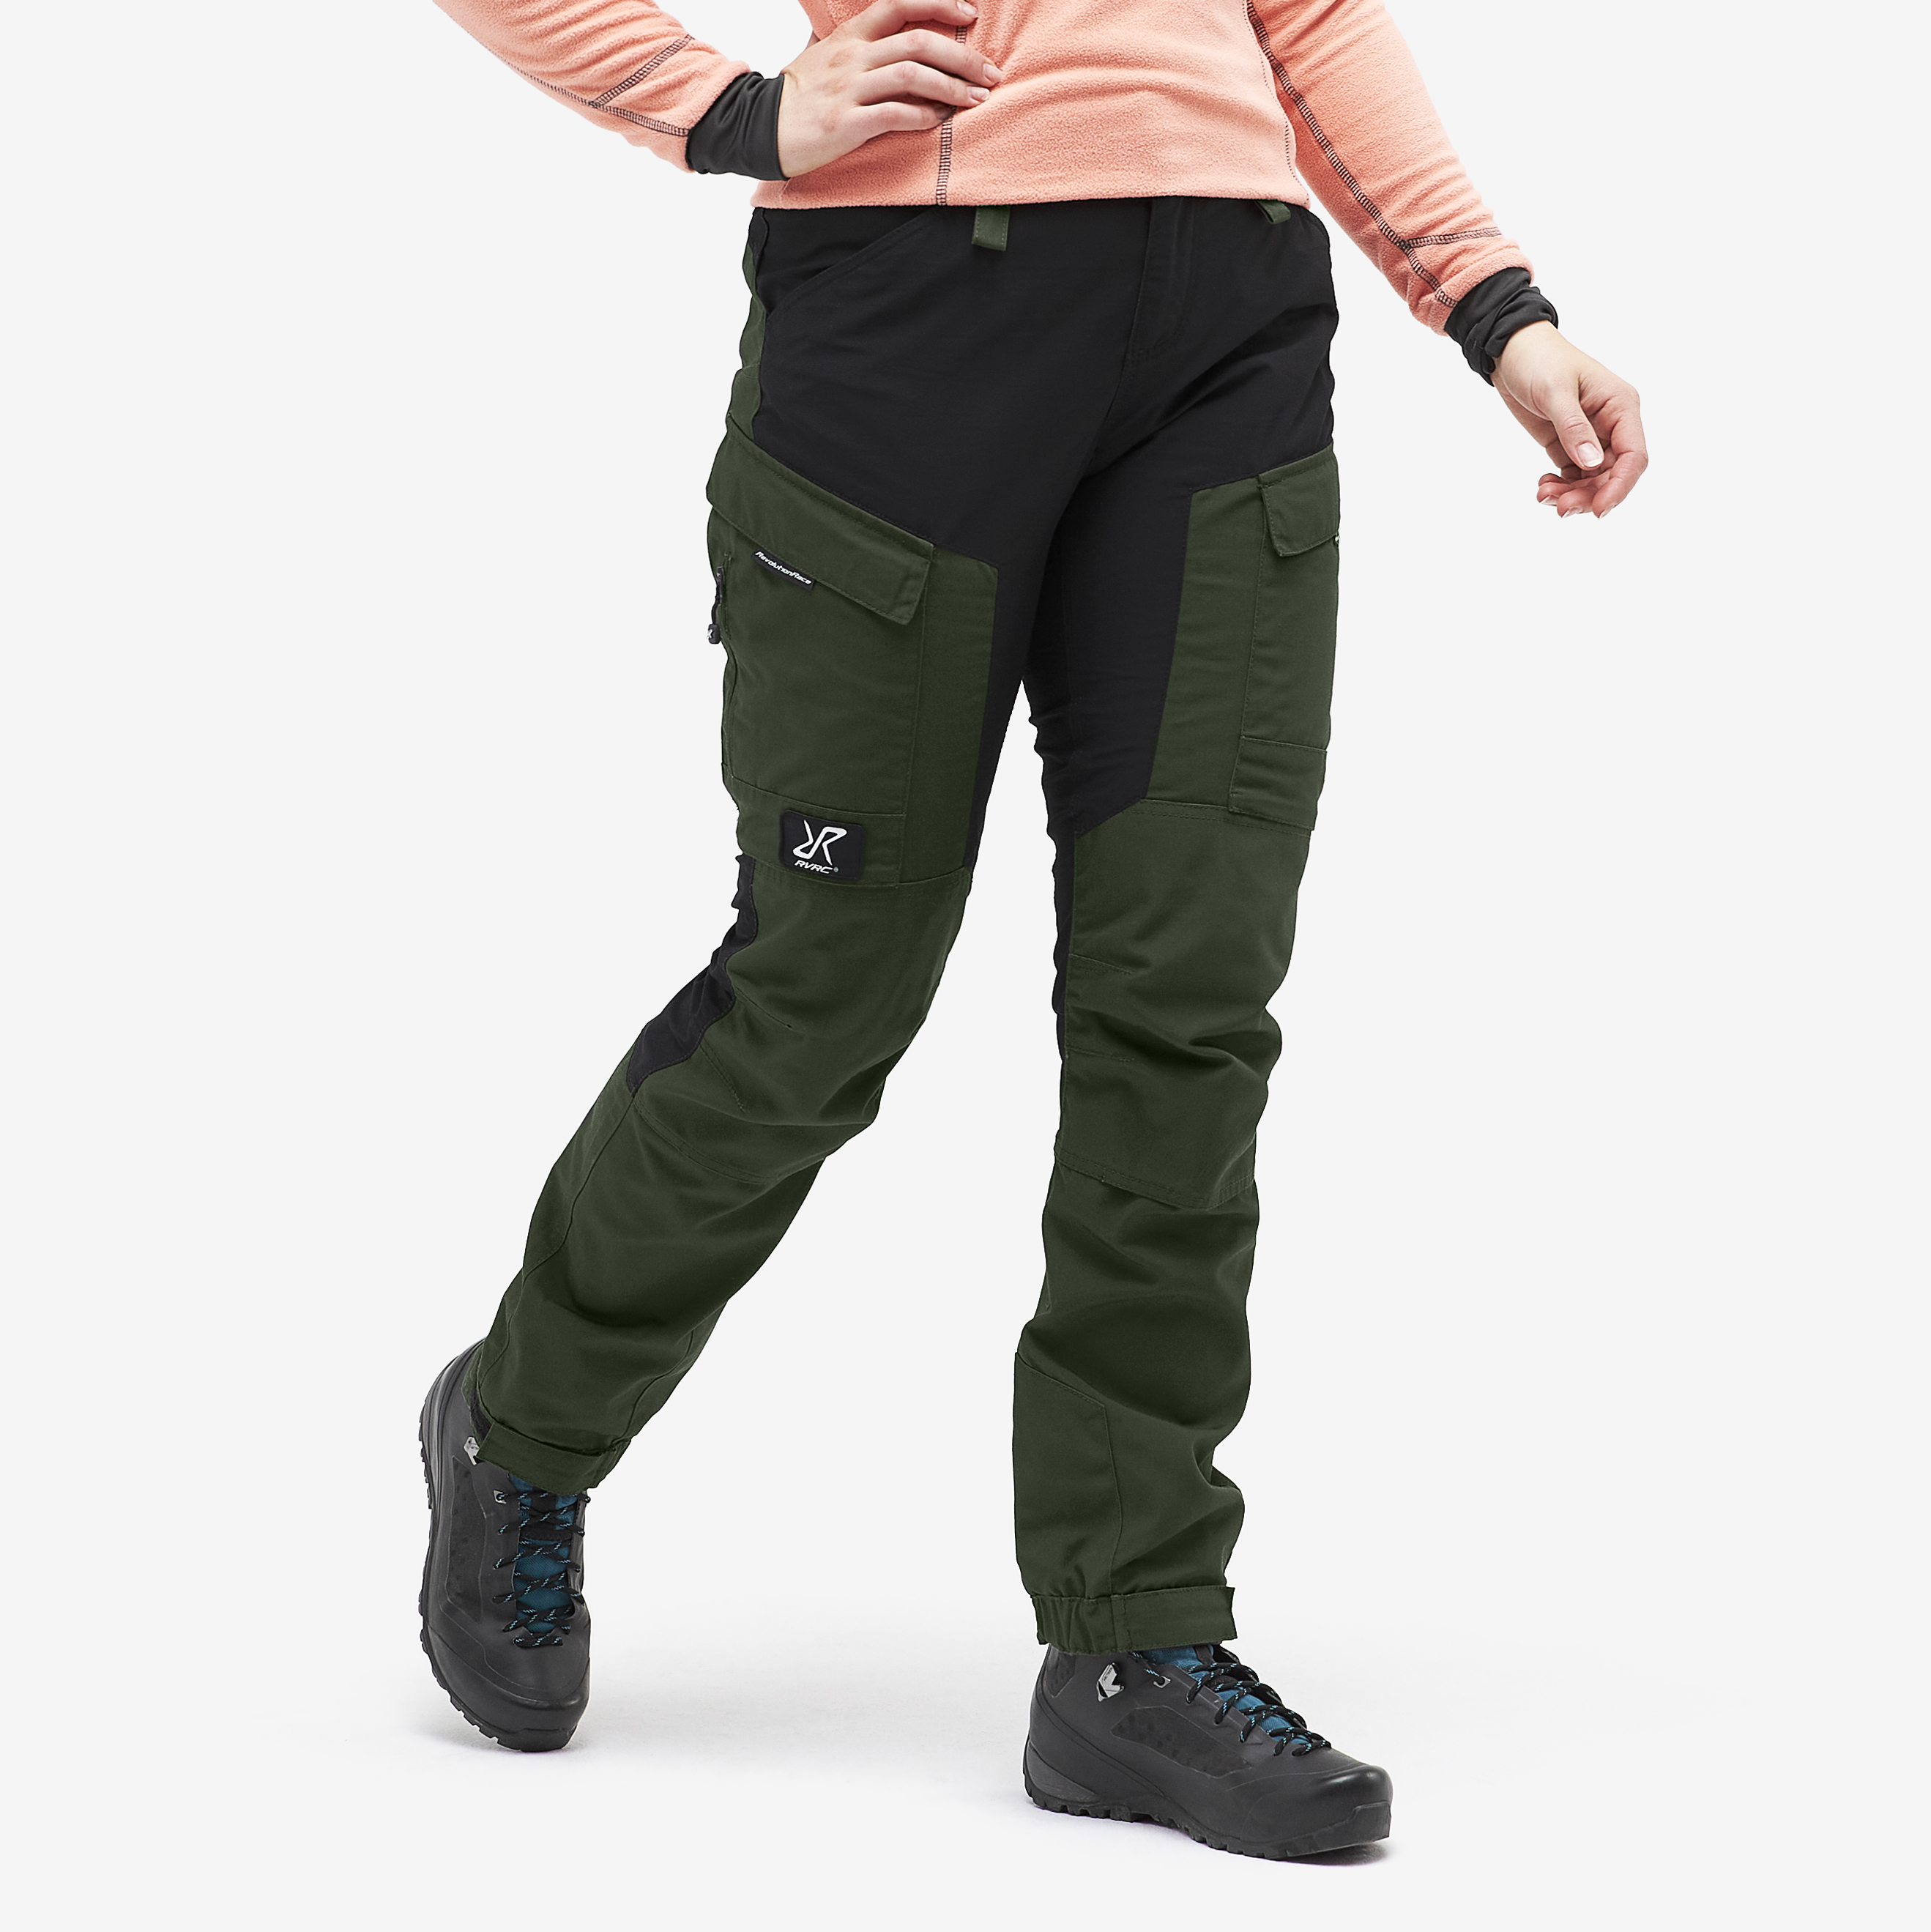 Pantalones outdoor RVRC GP Short para mujer en verde